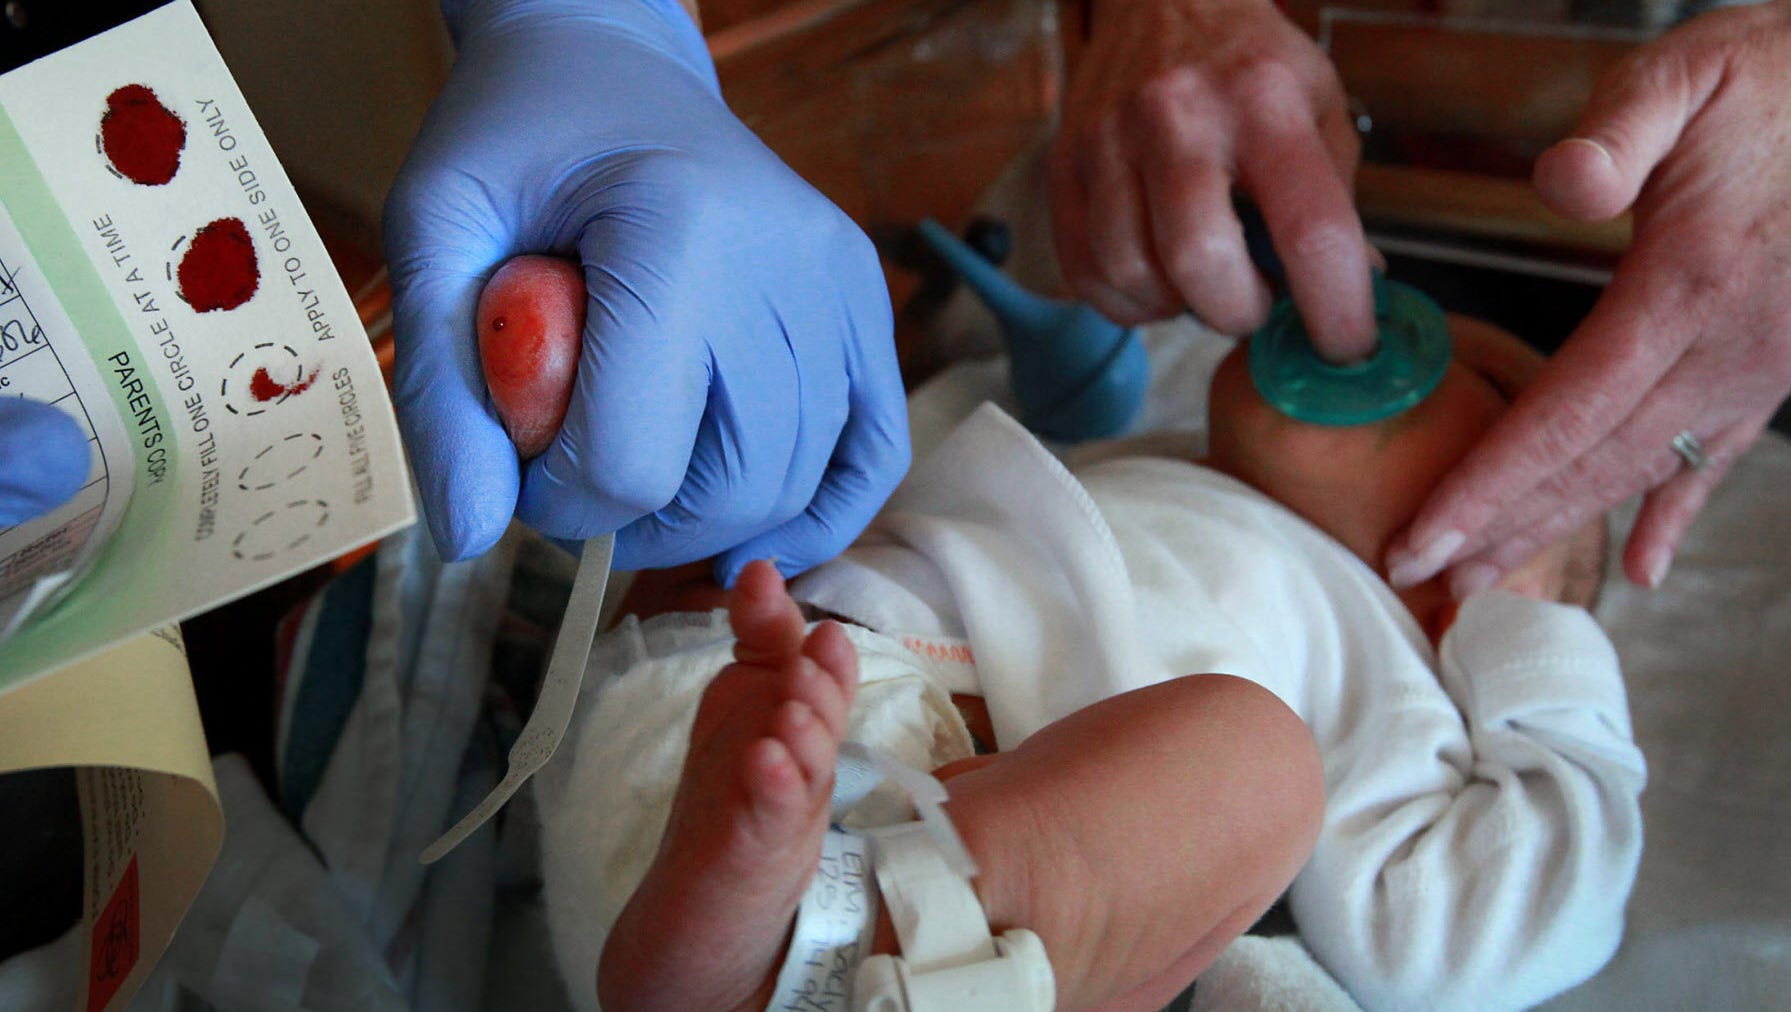 Newborn screening test developed for rare, deadly neurological